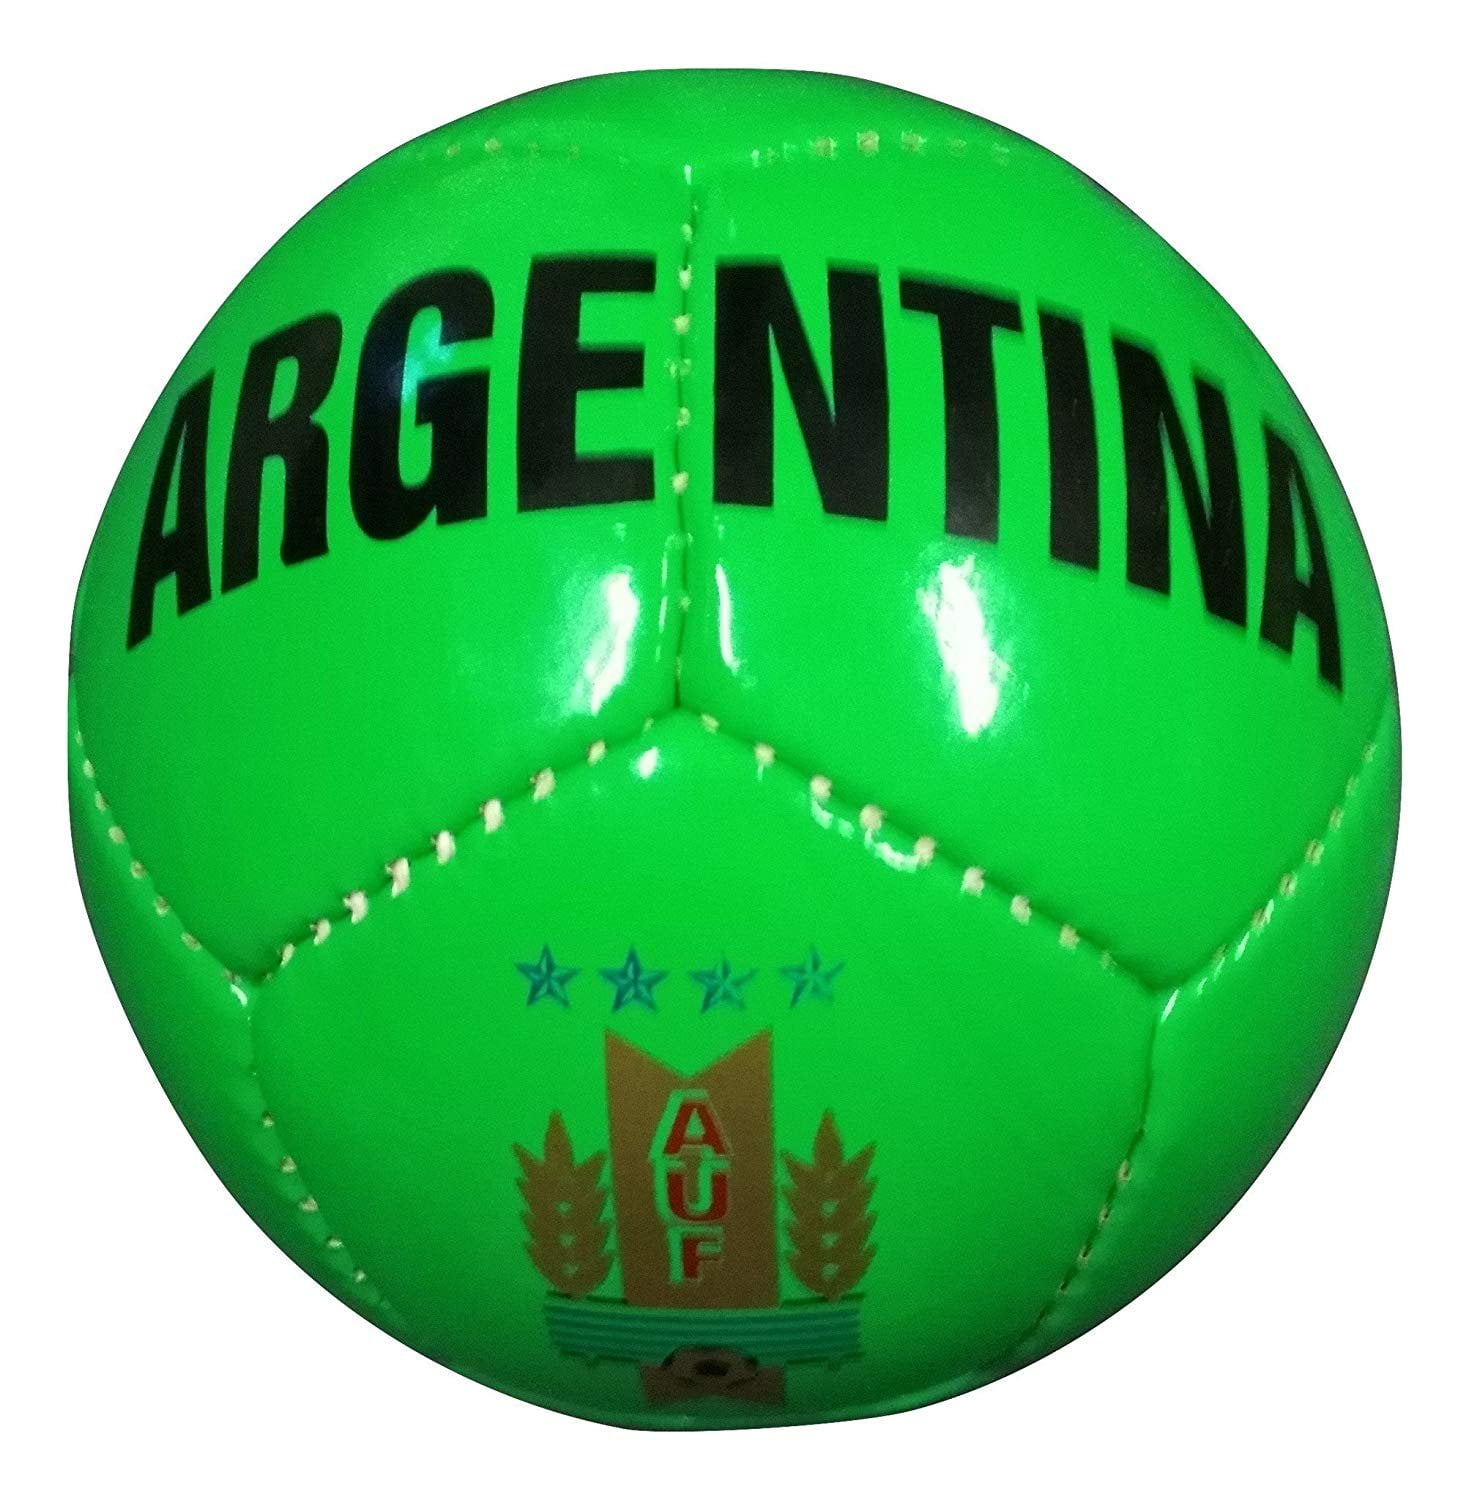 1 Stop Soccer Soccer Ball, Size 2, Green